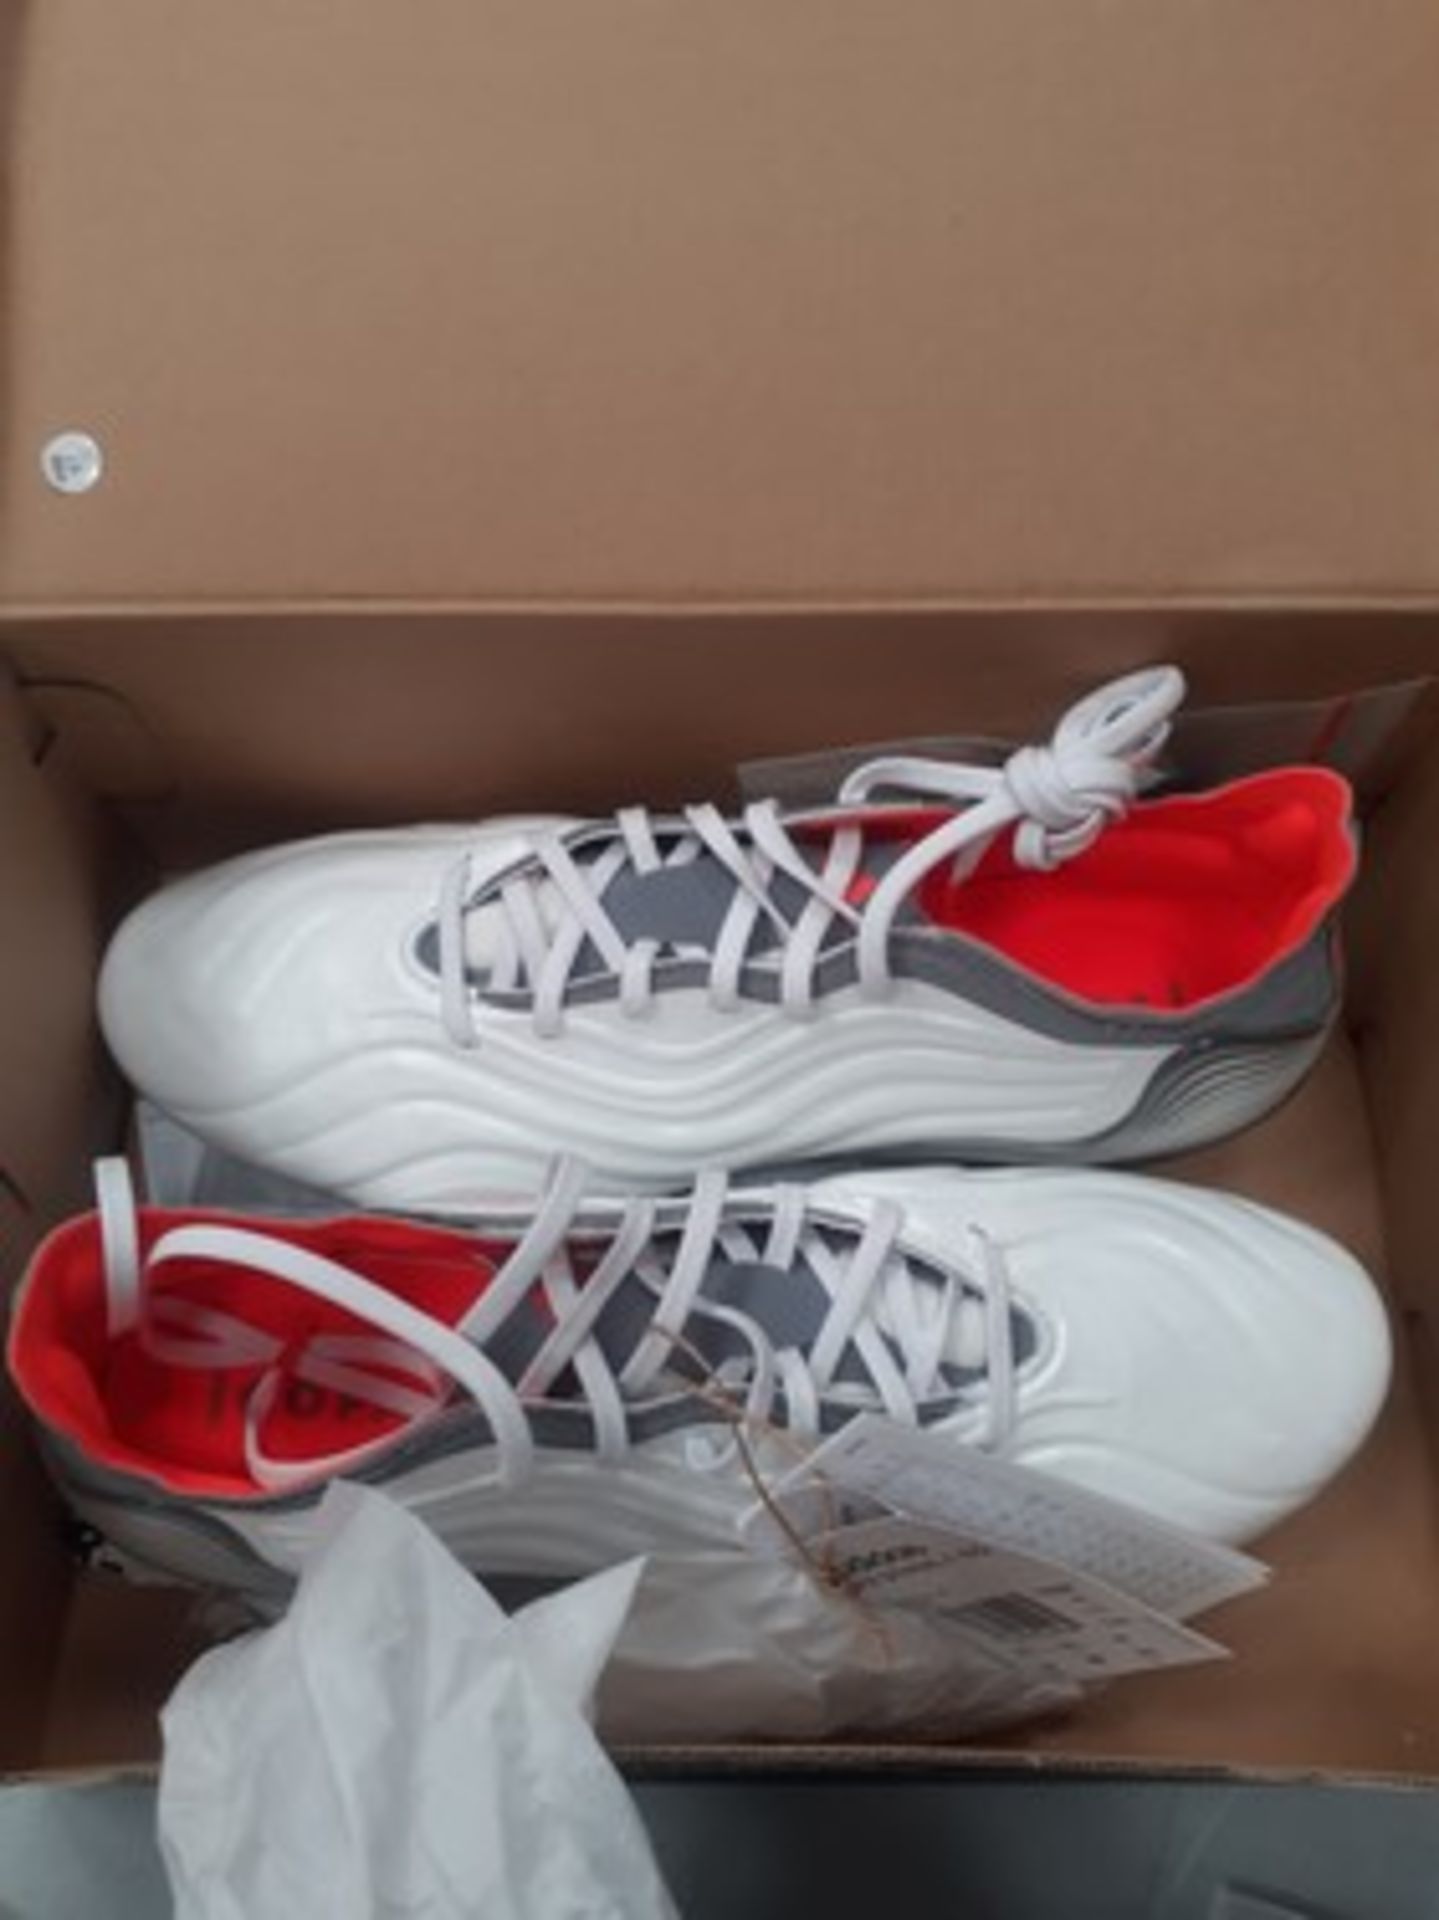 1 x pair of Adidas Copa Sense 1 SG football boots, size 9.5 - new in box (E3B)